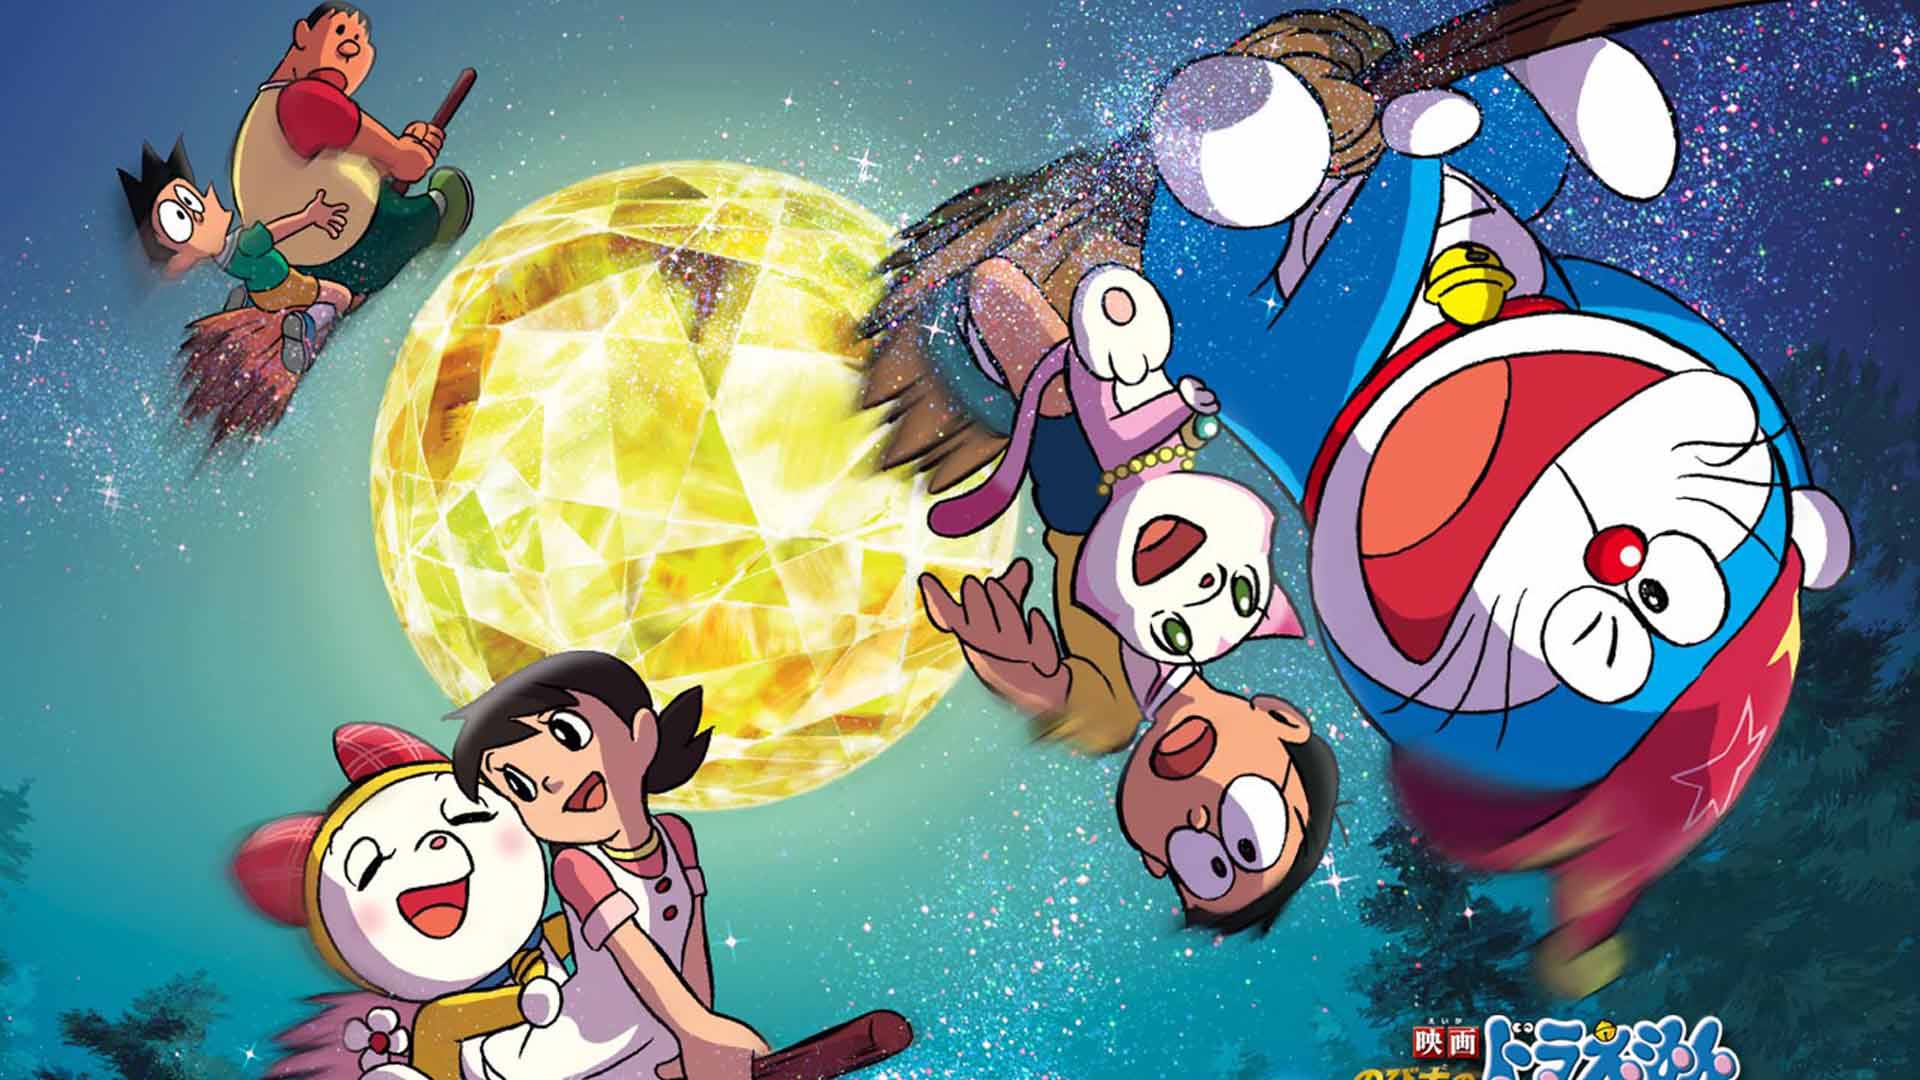 Doraemon HD Wallpaper, High Definition, High Quality